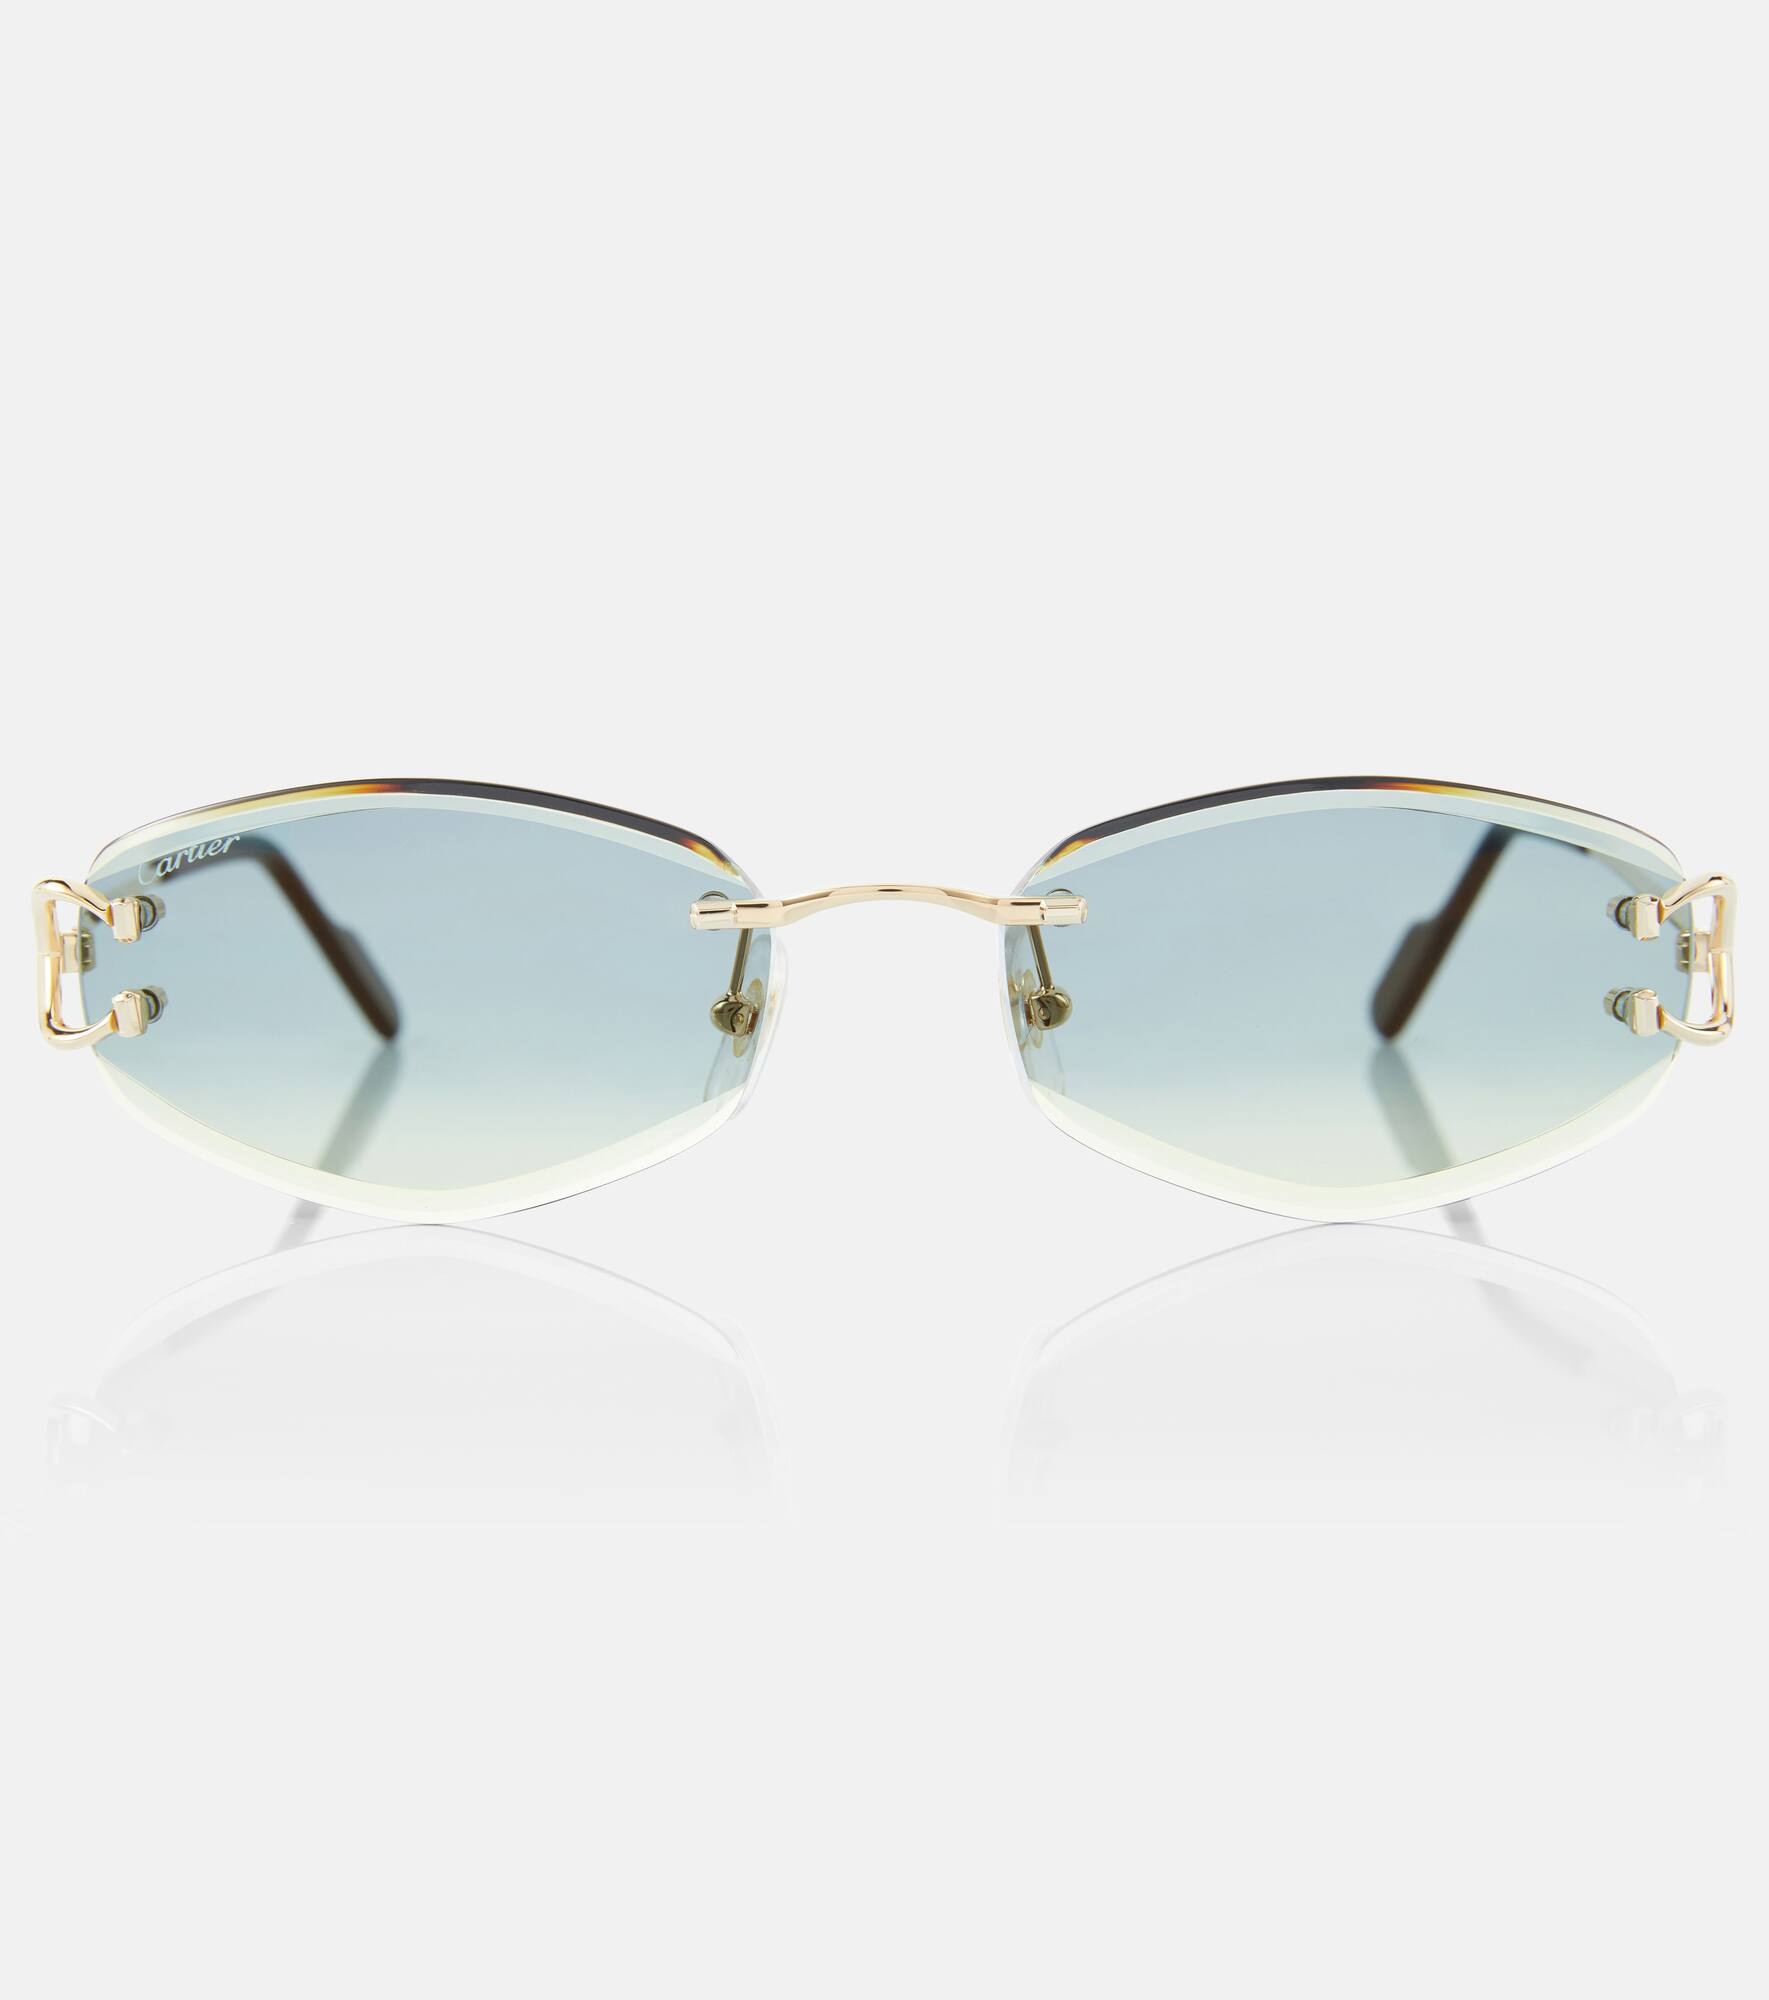 Signature C oval sunglasses - 1